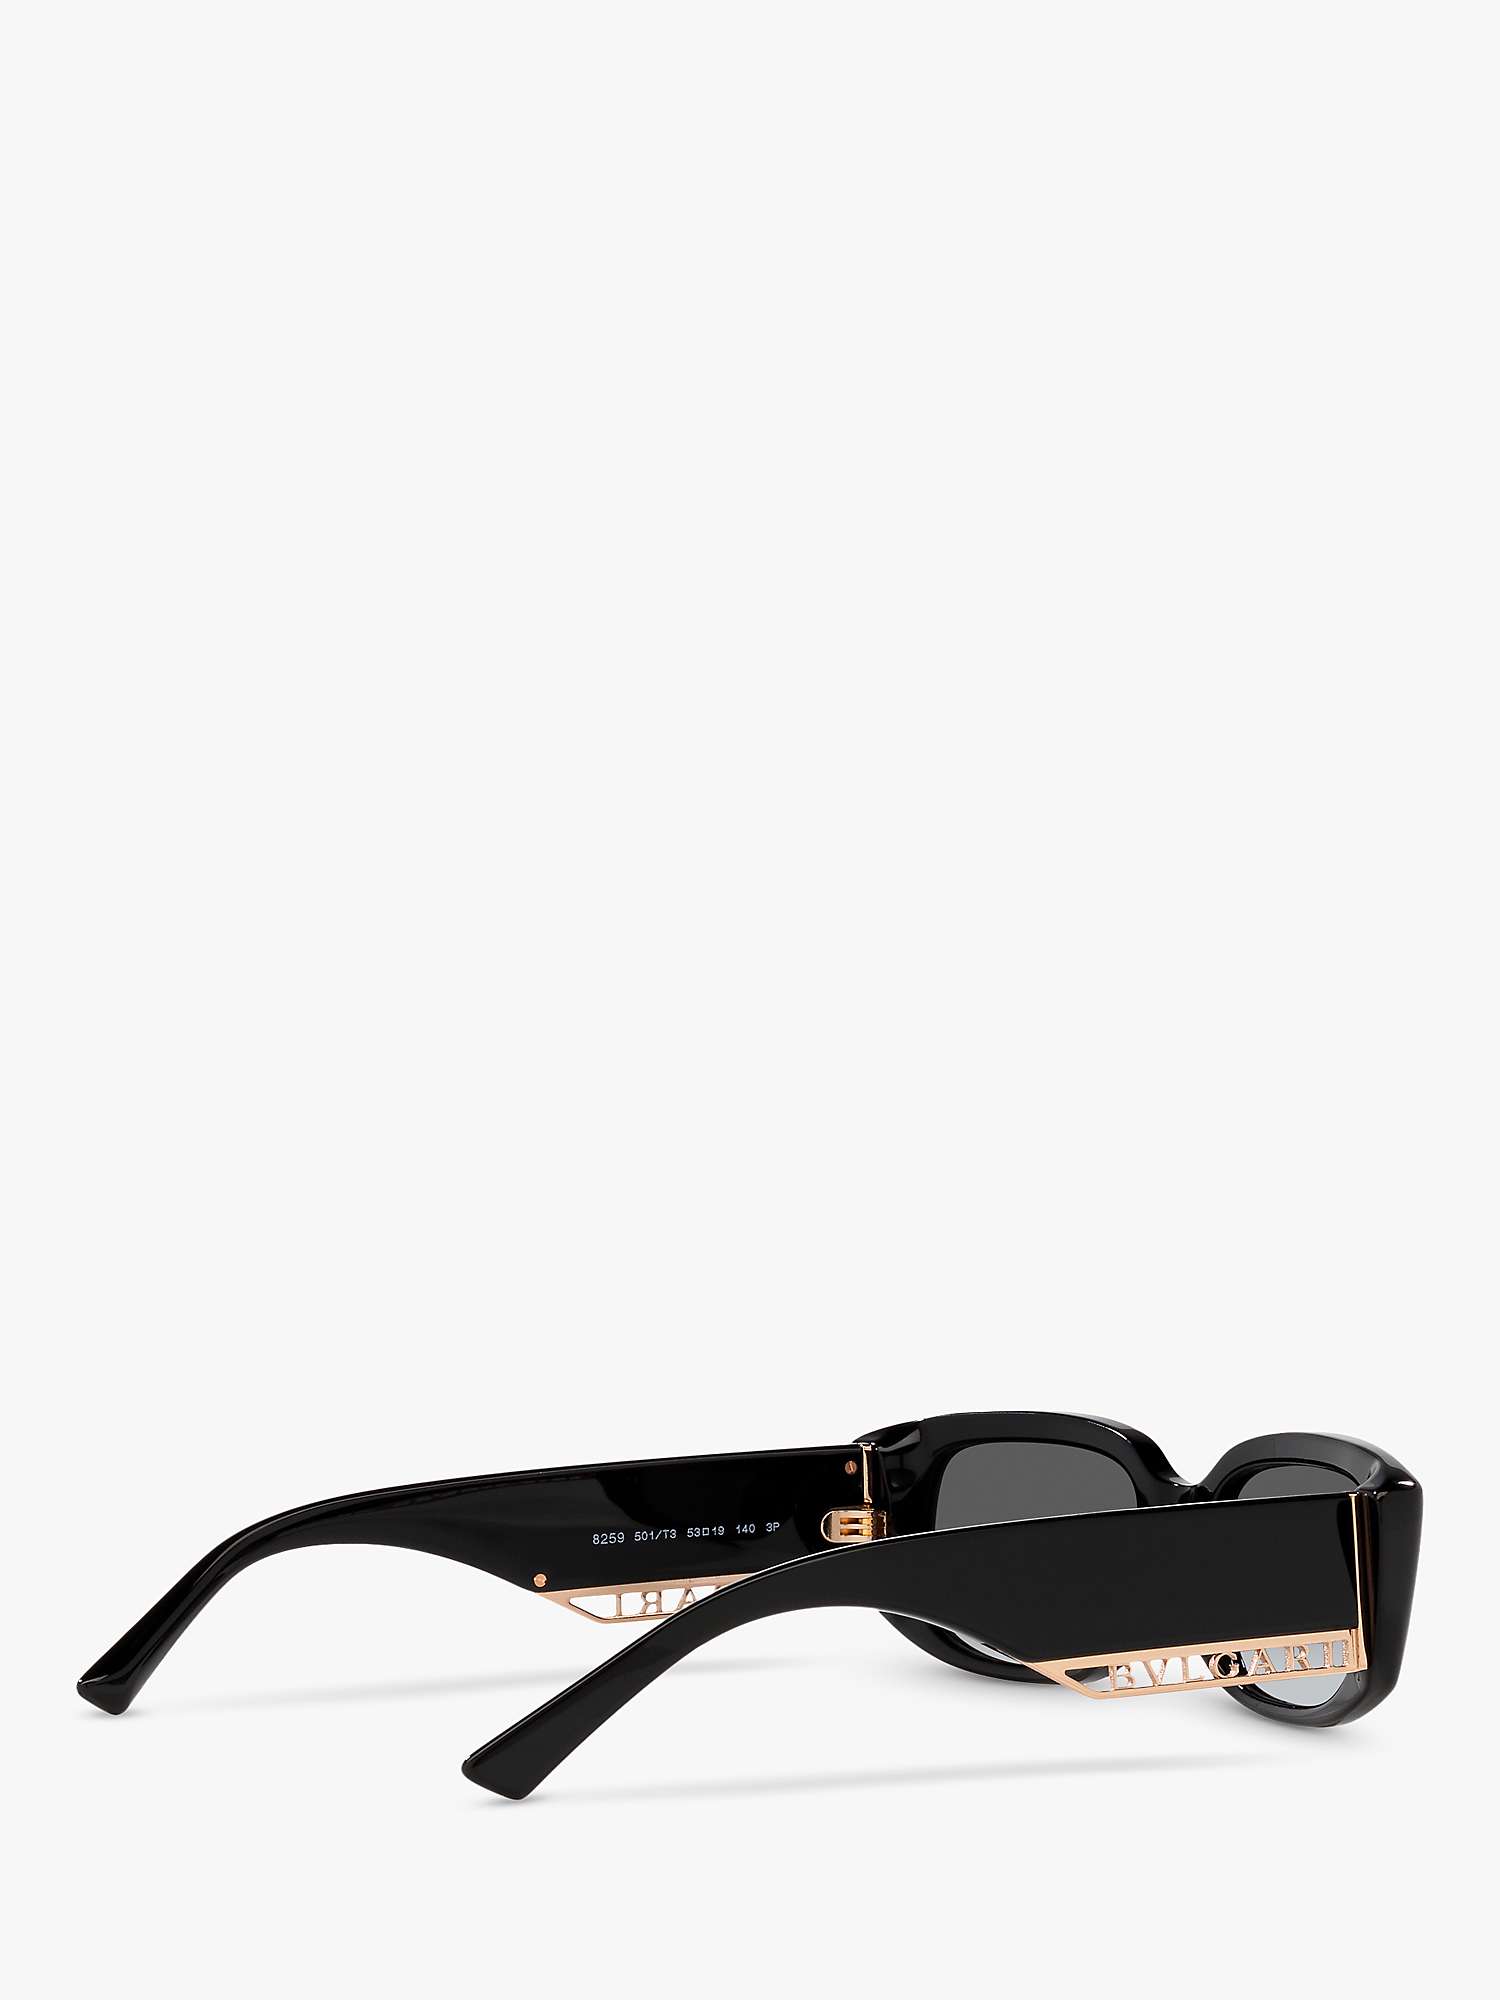 Buy BVLGARI BV8259 Women's Rectangular Sunglasses, Black Online at johnlewis.com